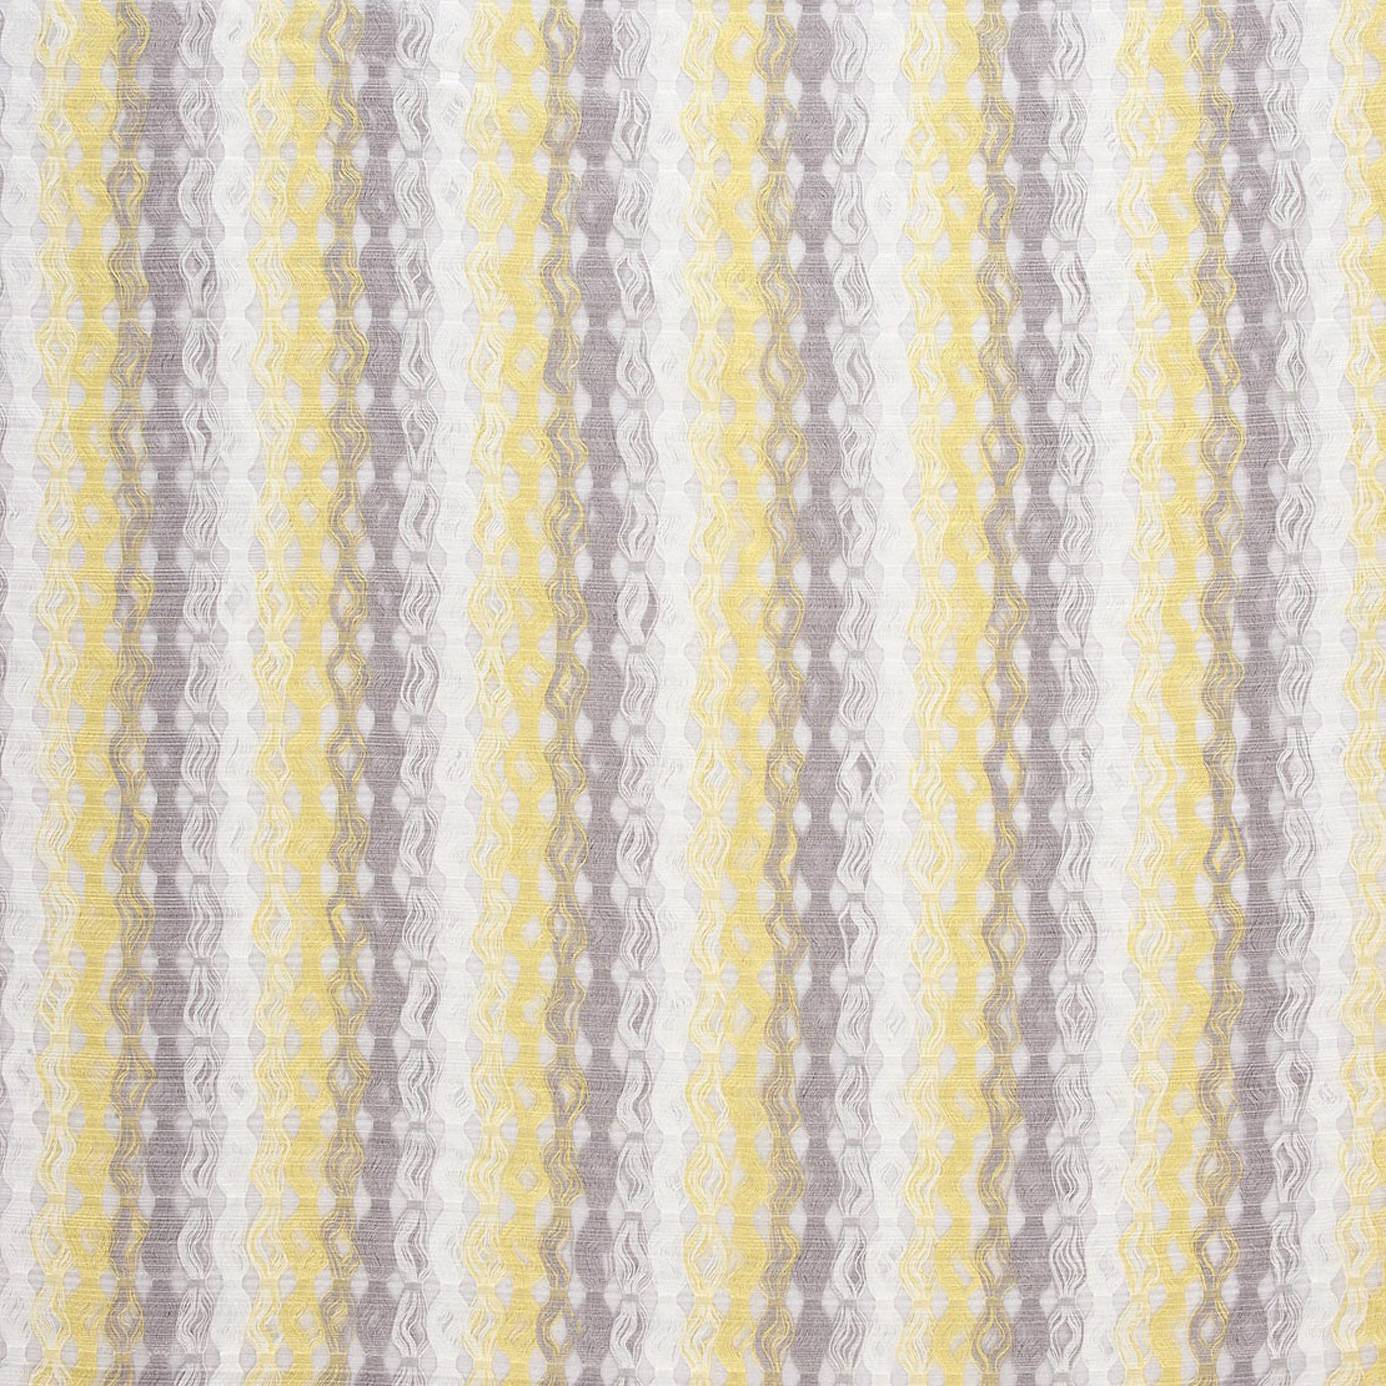 Thread Fabric   Grey 21519228   Casadeco Glamour Fabrics Collection